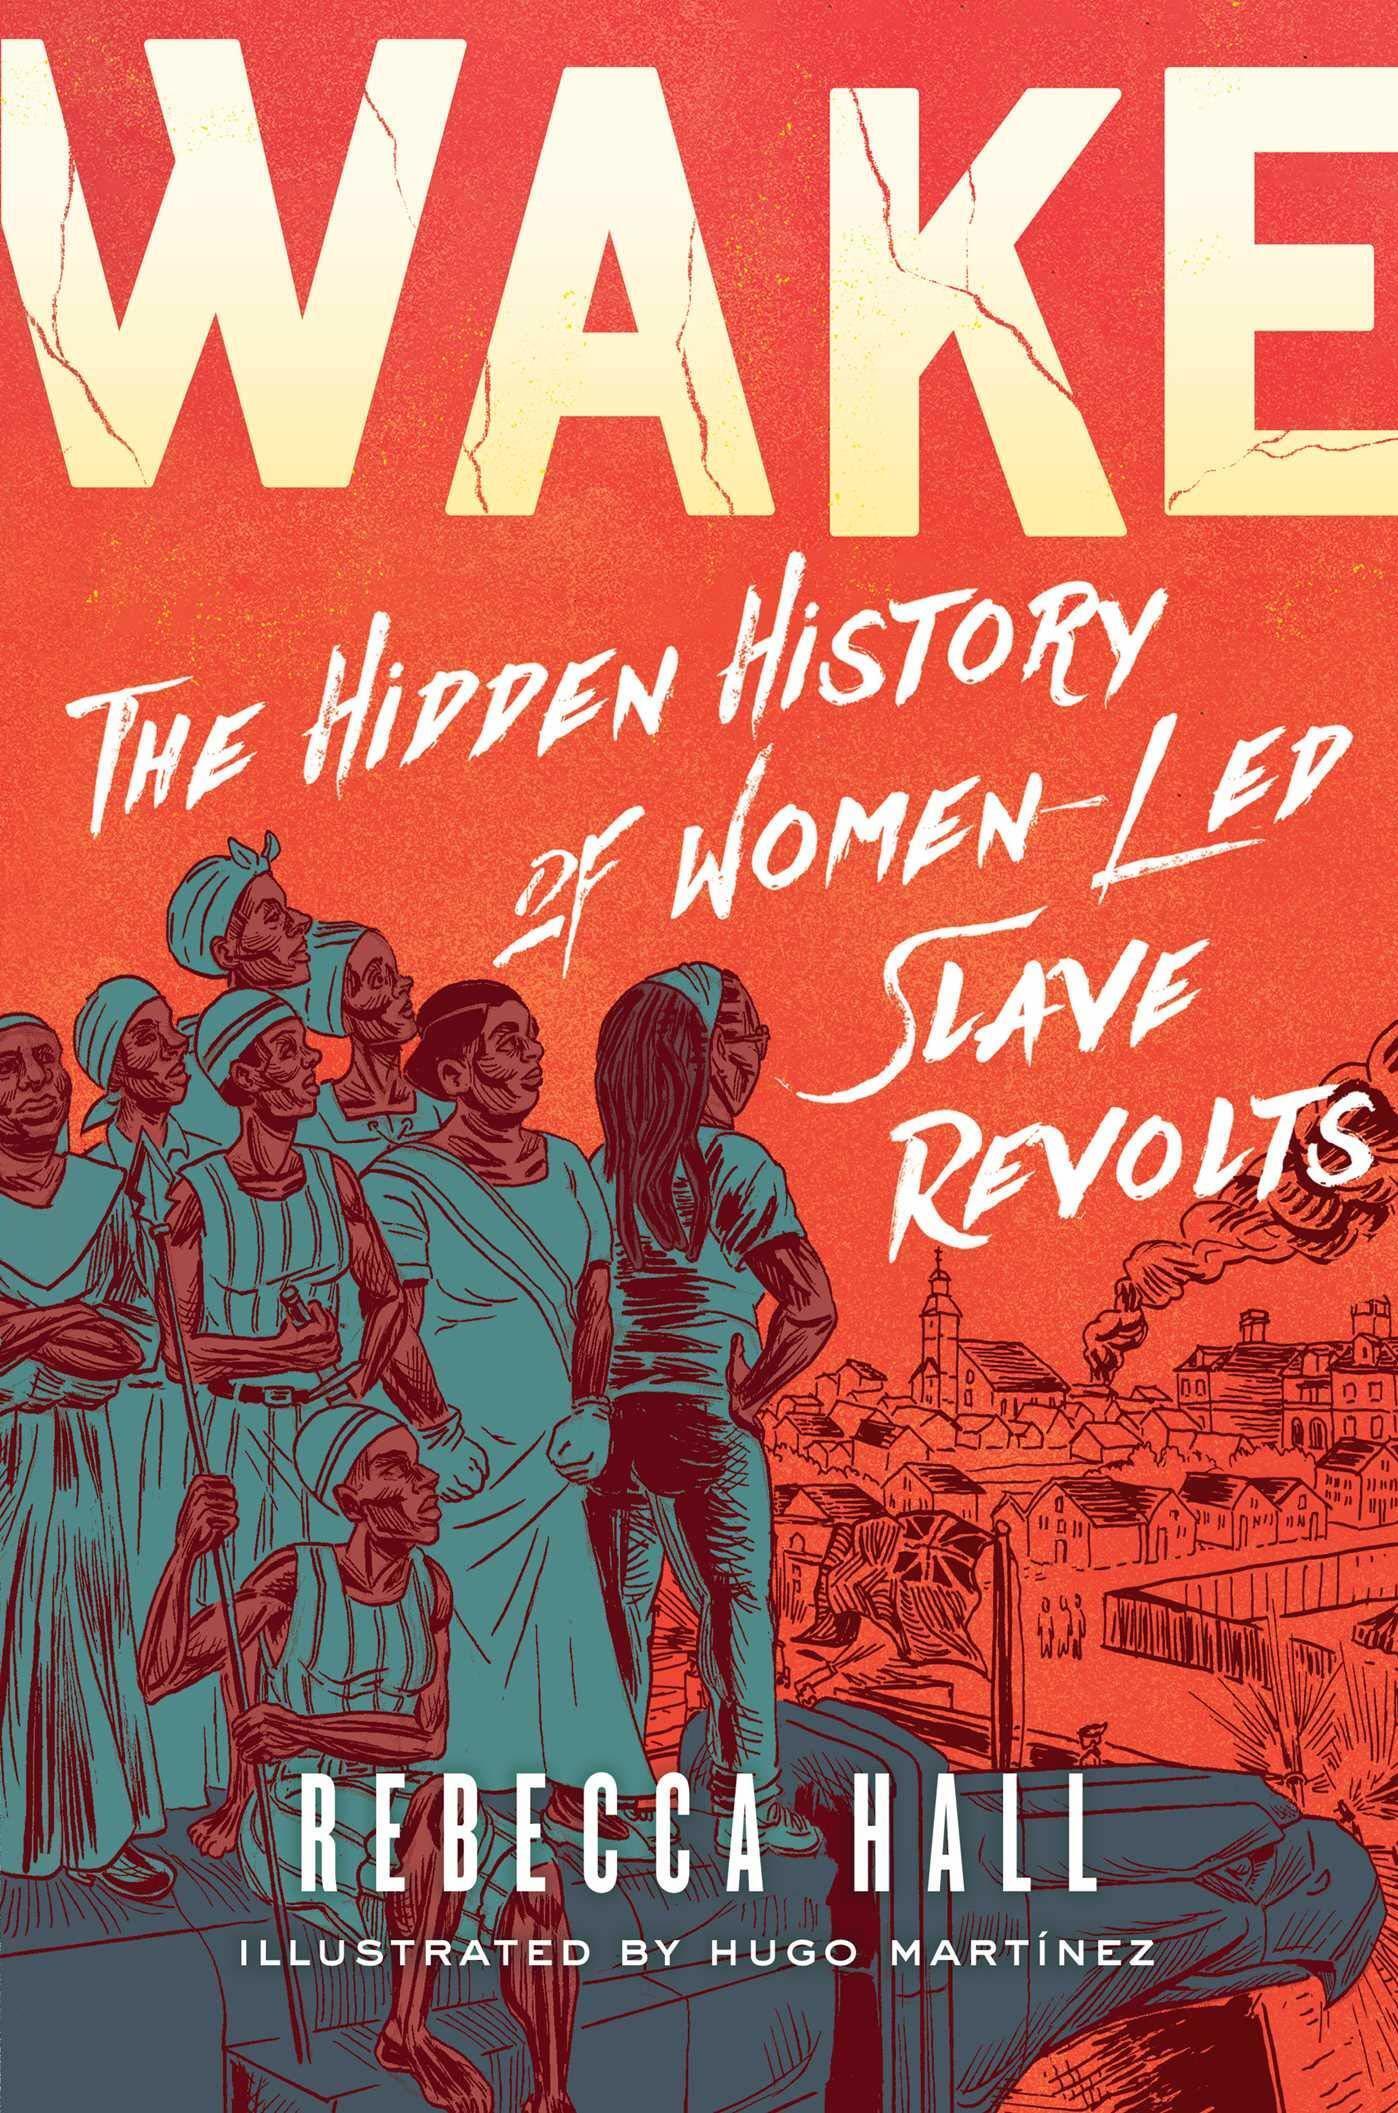 Wake: The Secret History of Female-Led Slave Rebellions, by Rebecca Hall and Hugo Martínez